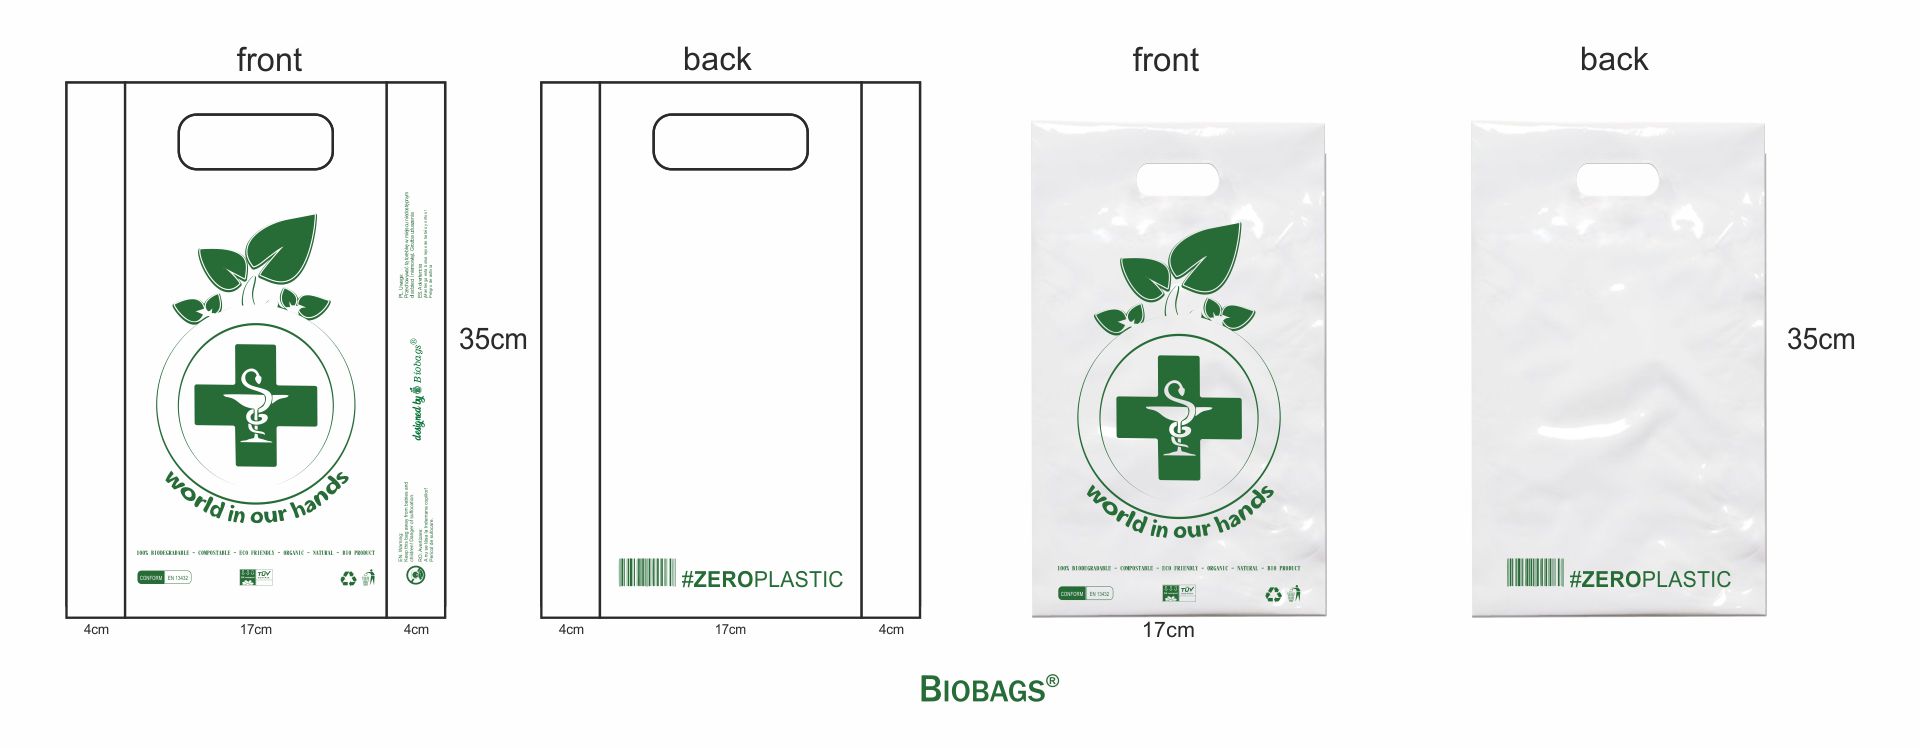 Farmacy - Biobags template 17x35cm